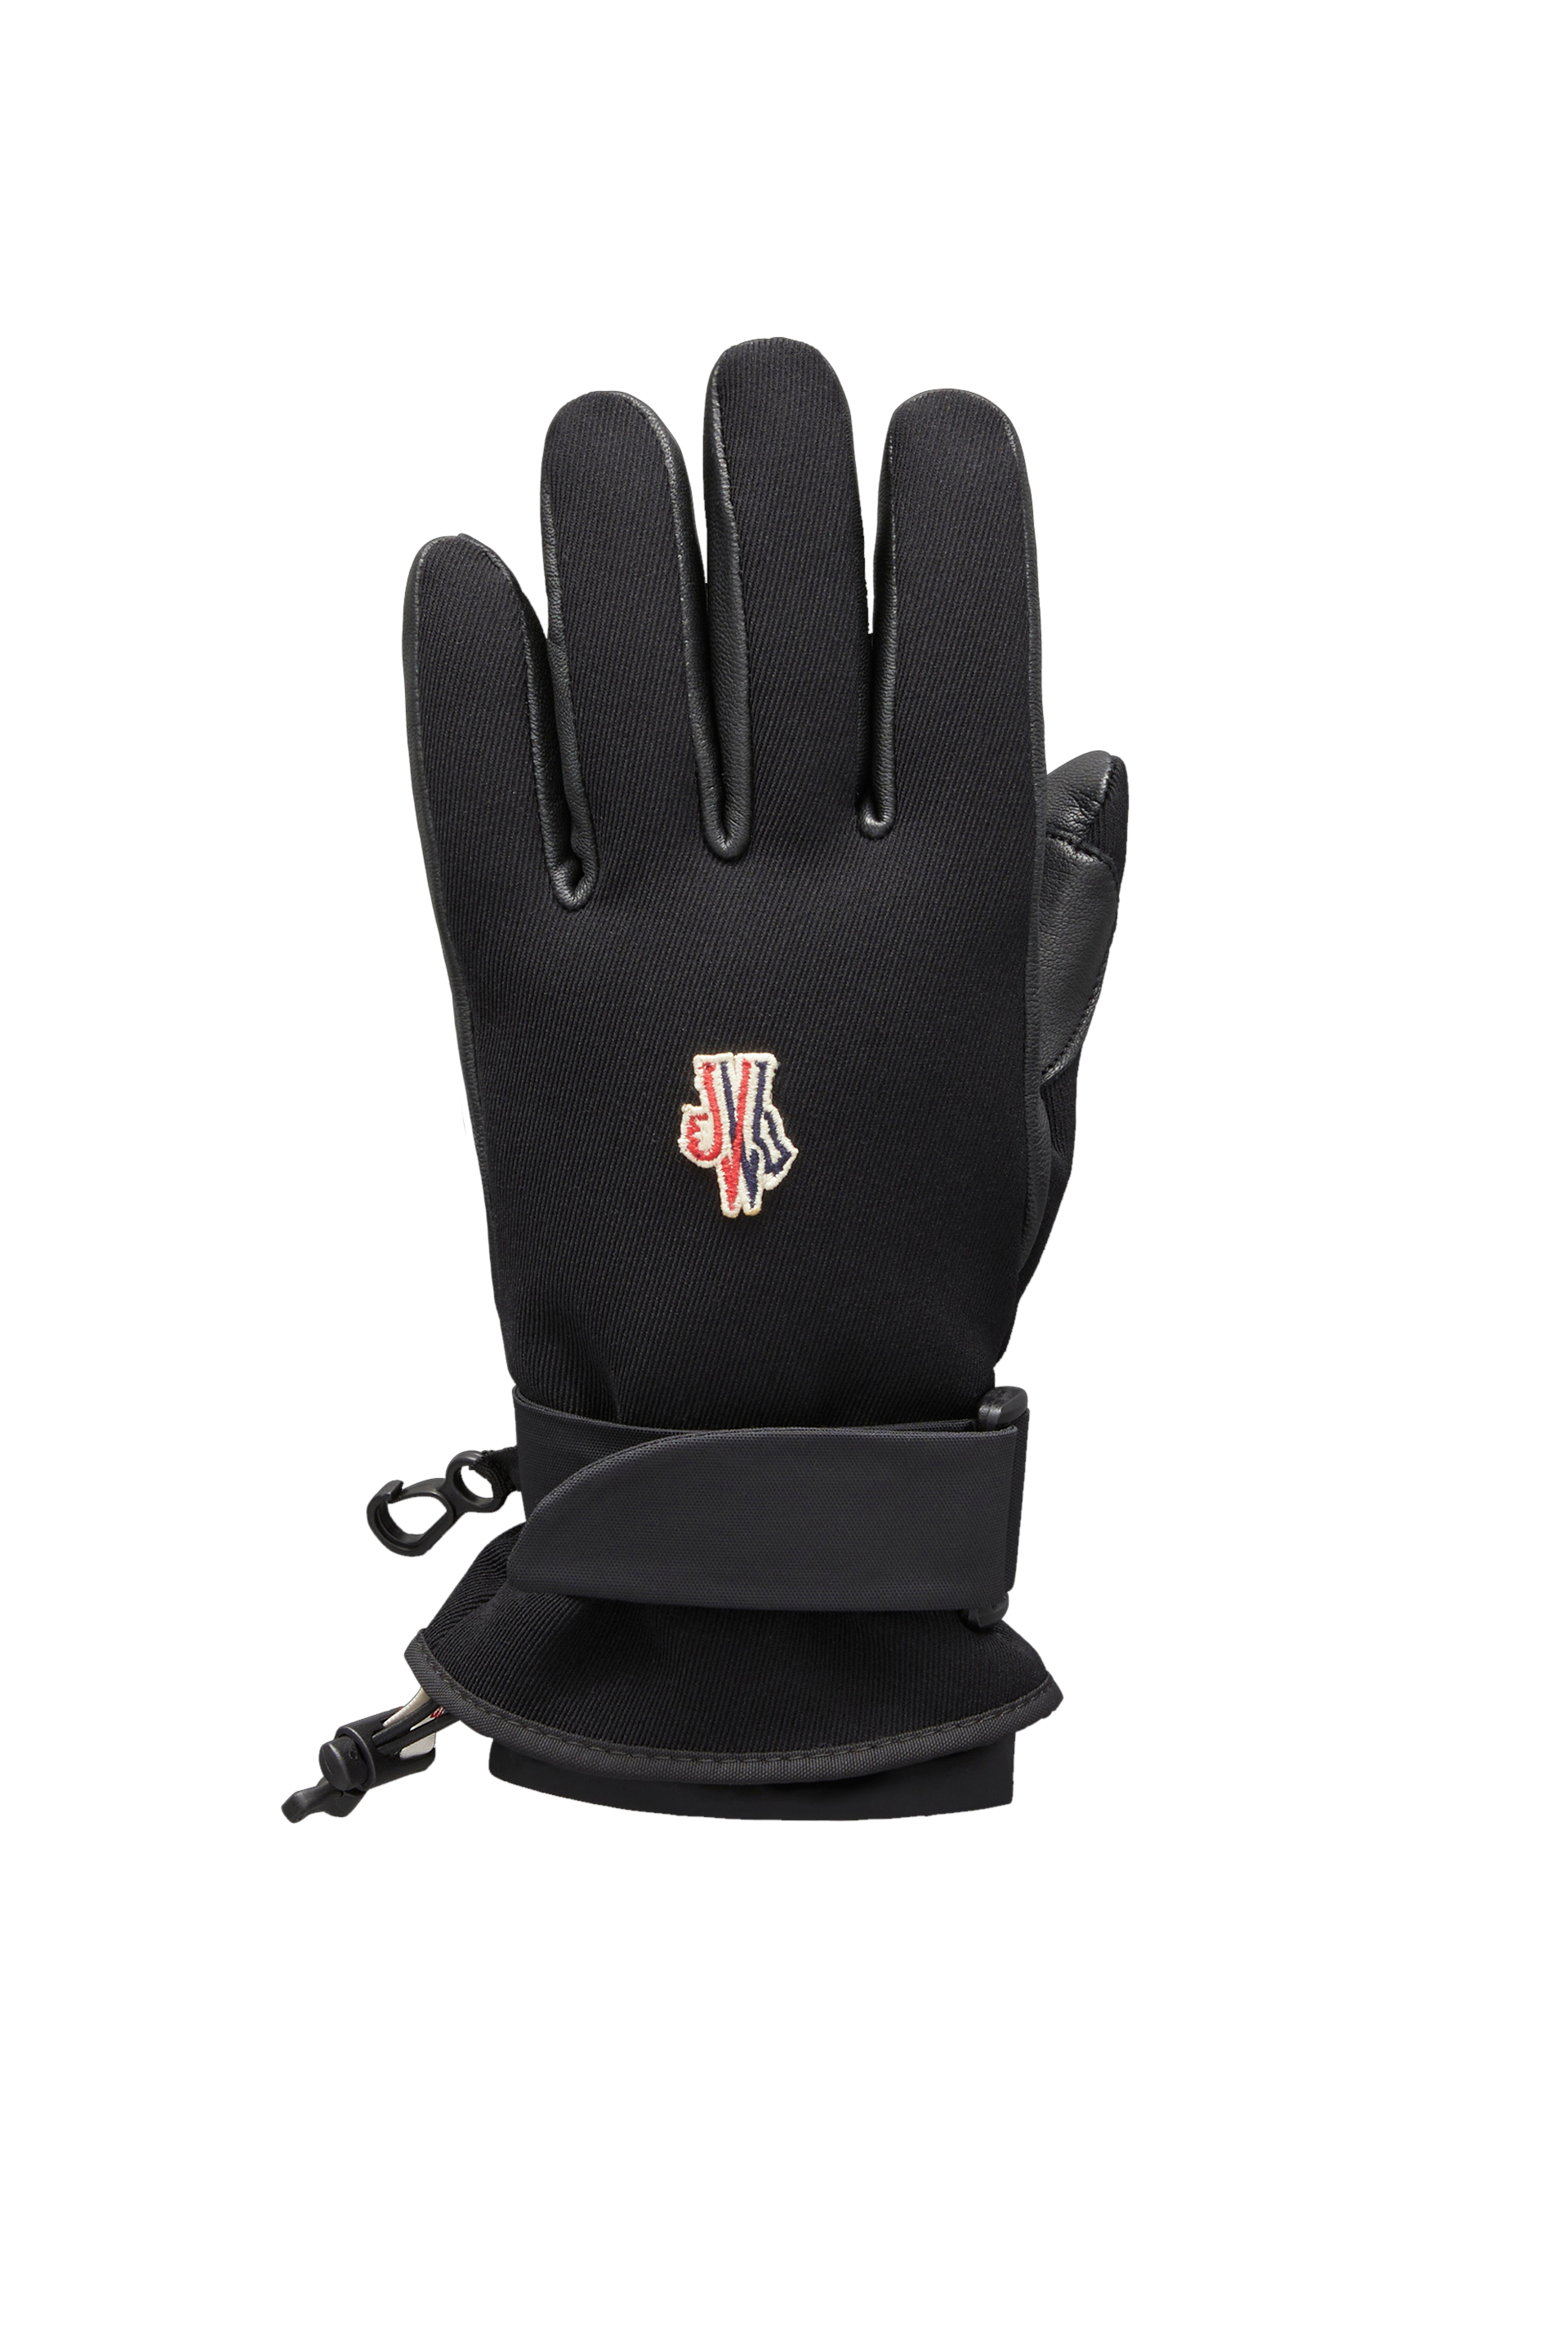 Moncler Padded Gloves Black Size L